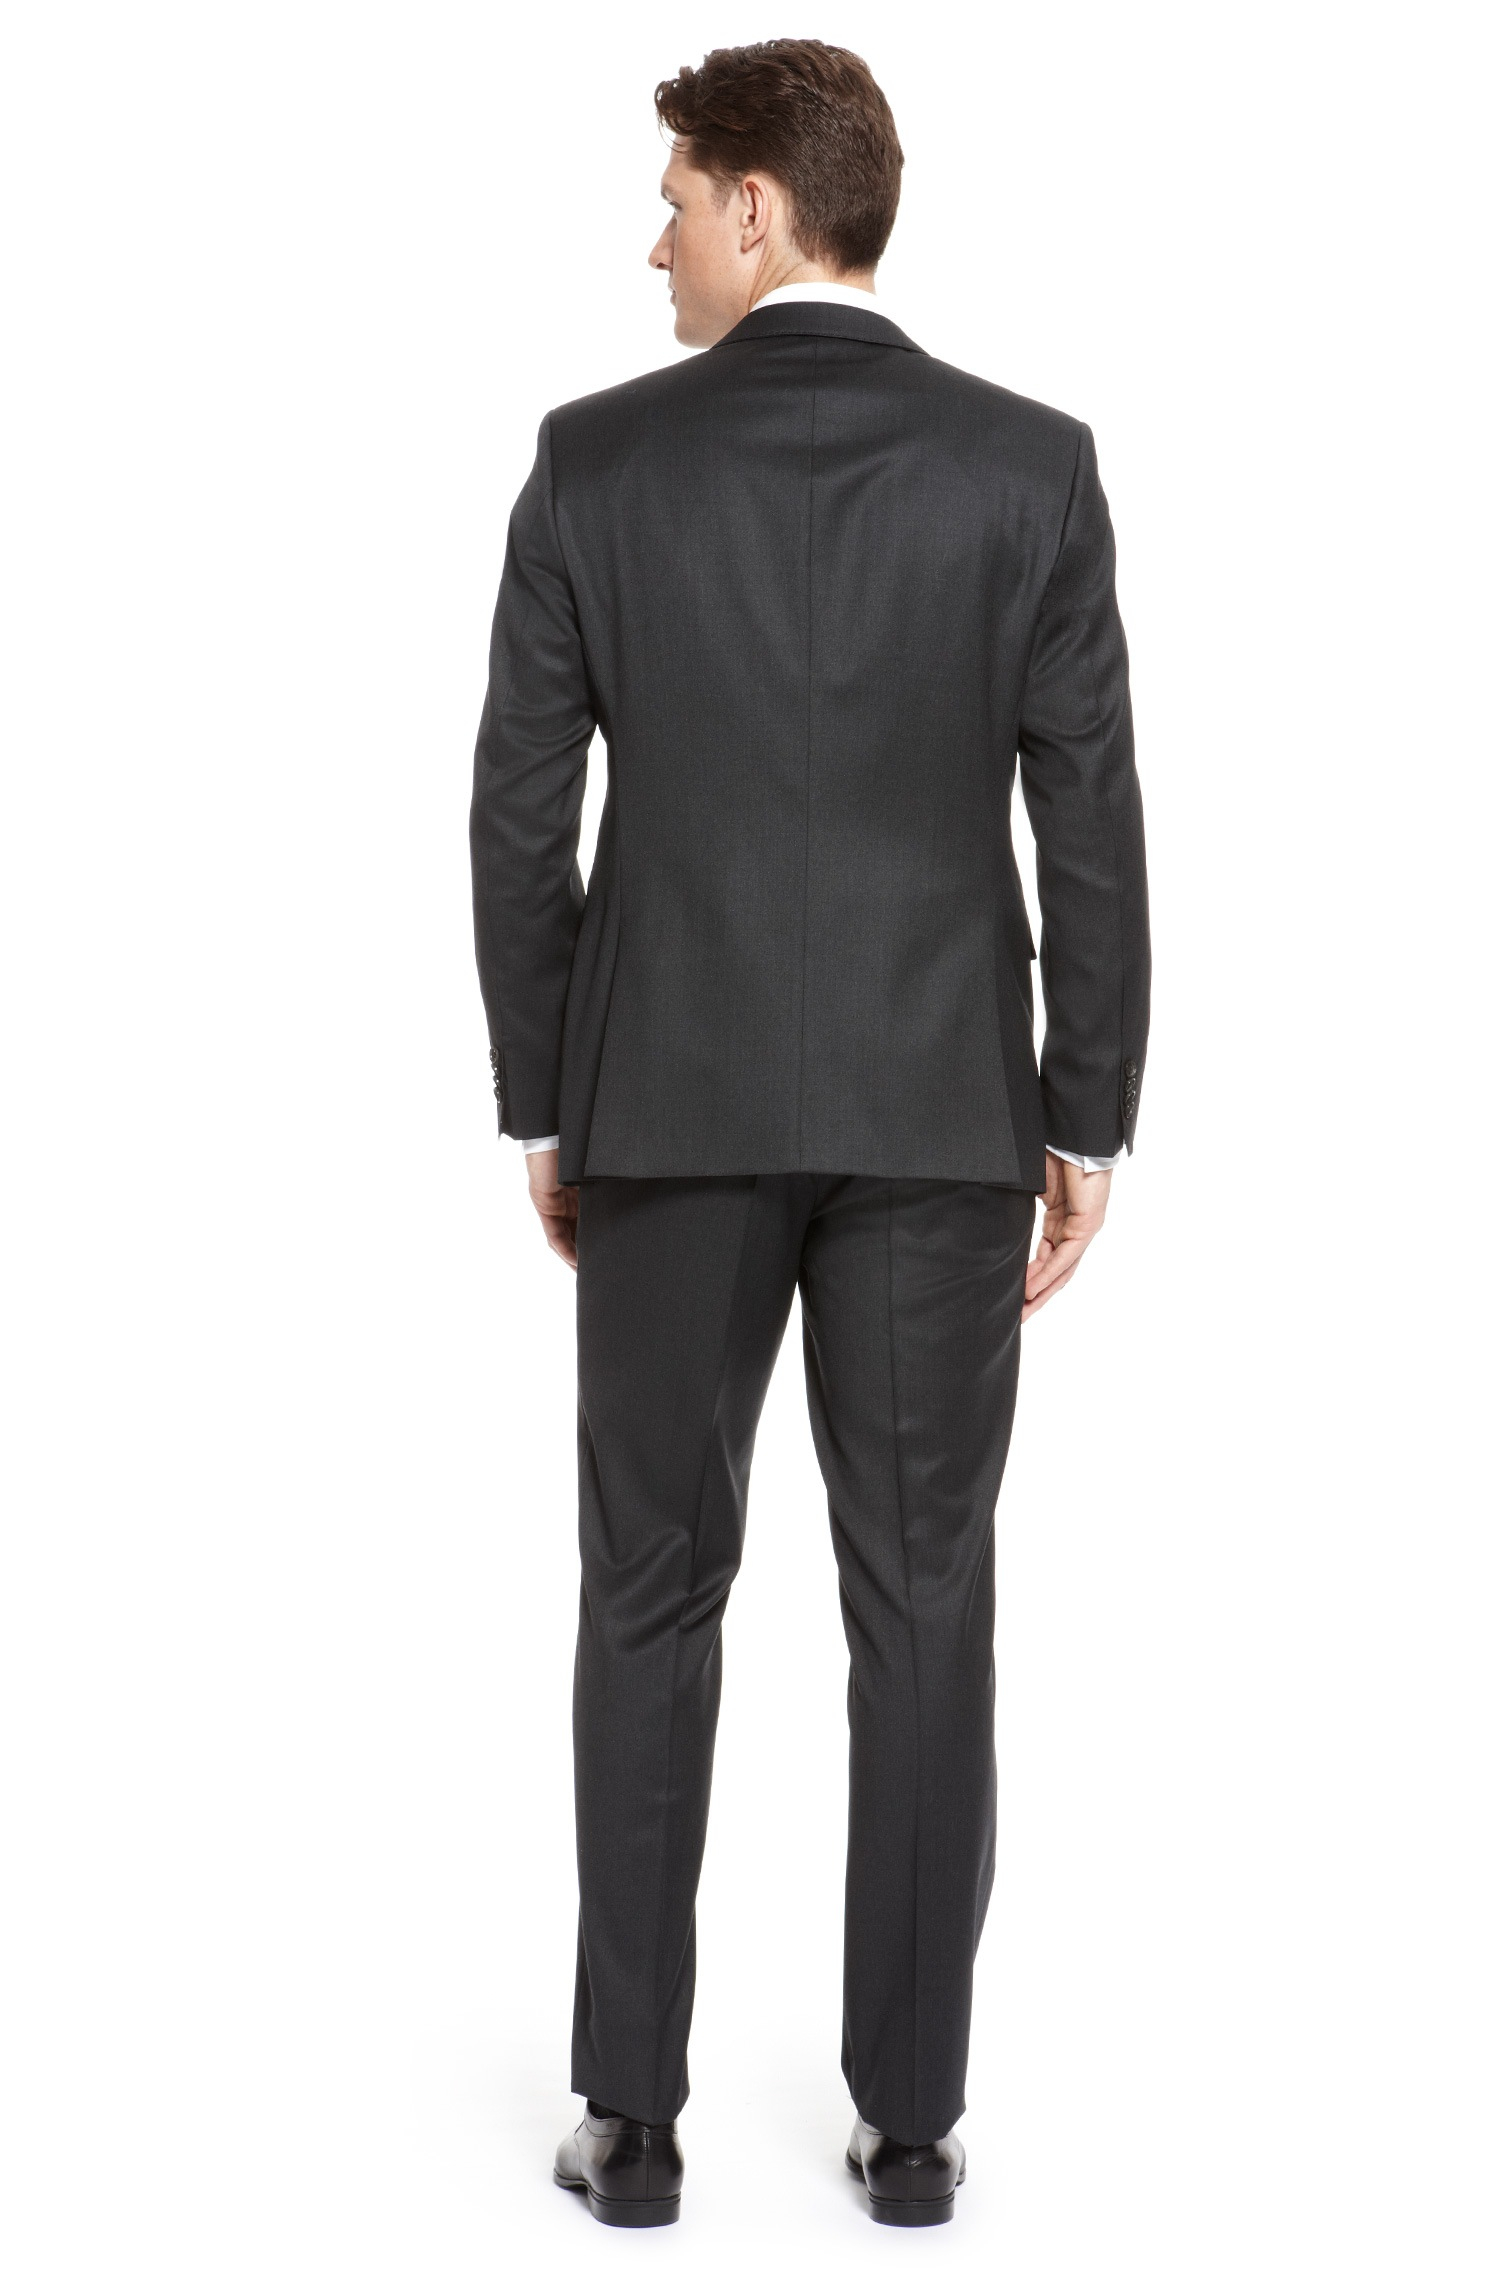 BOSS by HUGO BOSS 'the James/sharp' | Regular Fit, Super 100 Virgin Wool  Suit in Dark Grey (Gray) for Men - Lyst